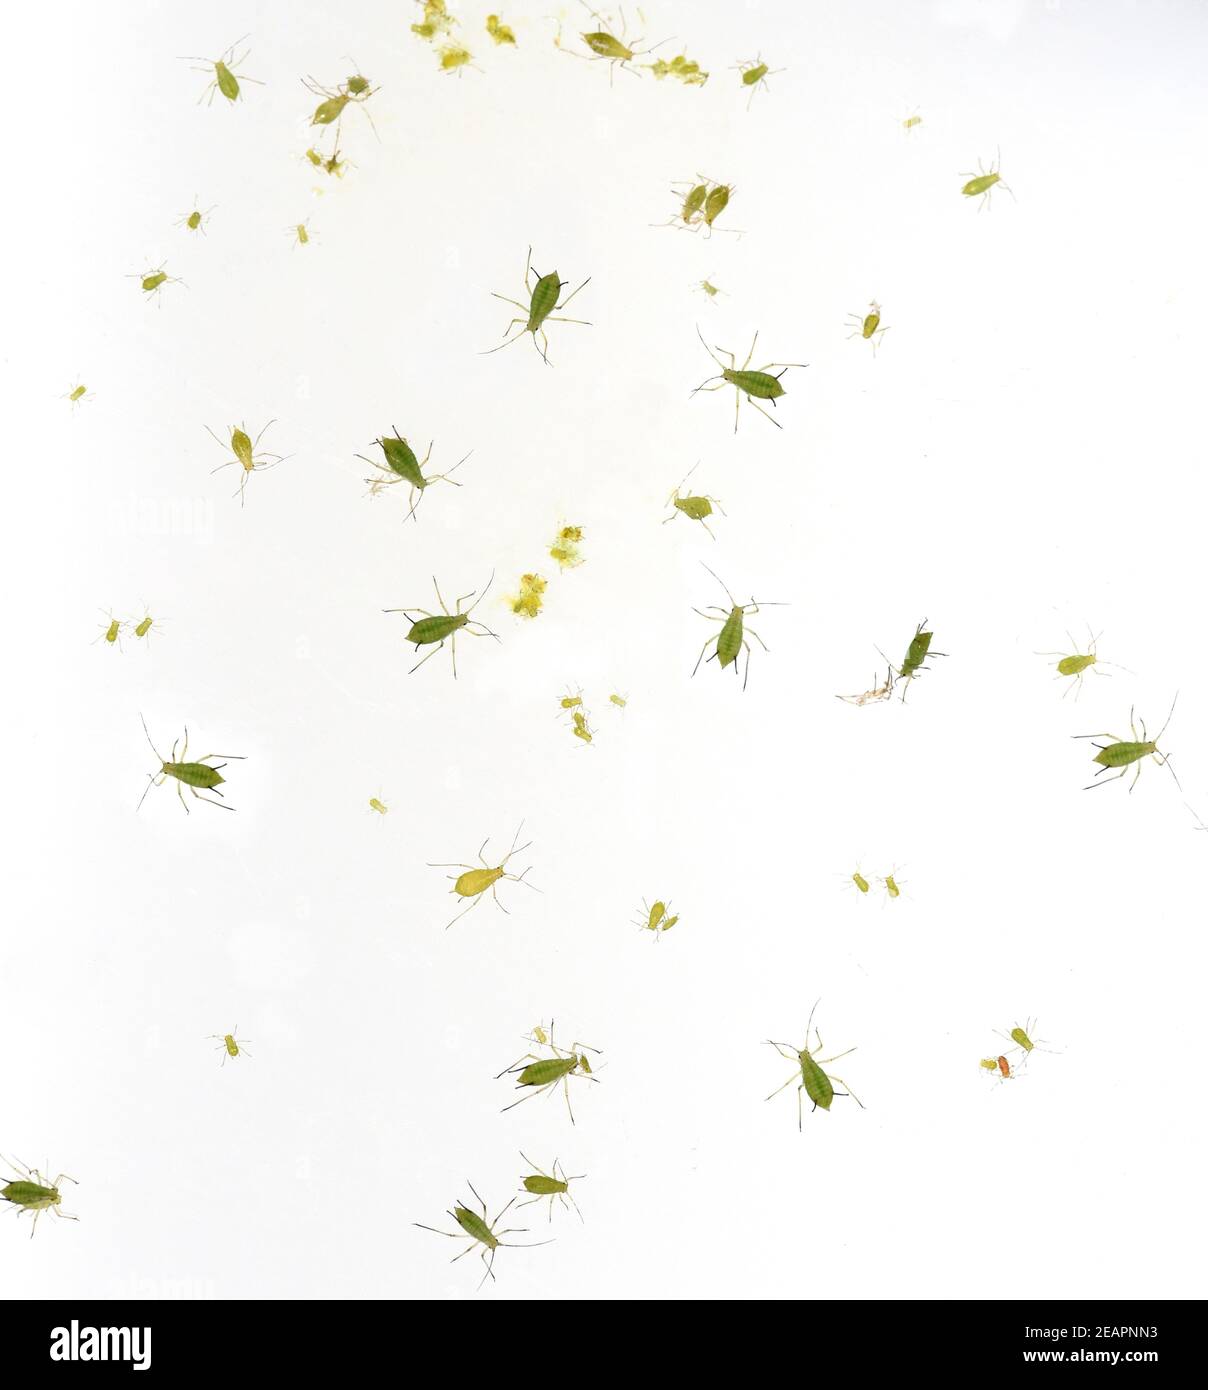 Blattlaeuse, Aphidina, Insekt Foto de stock